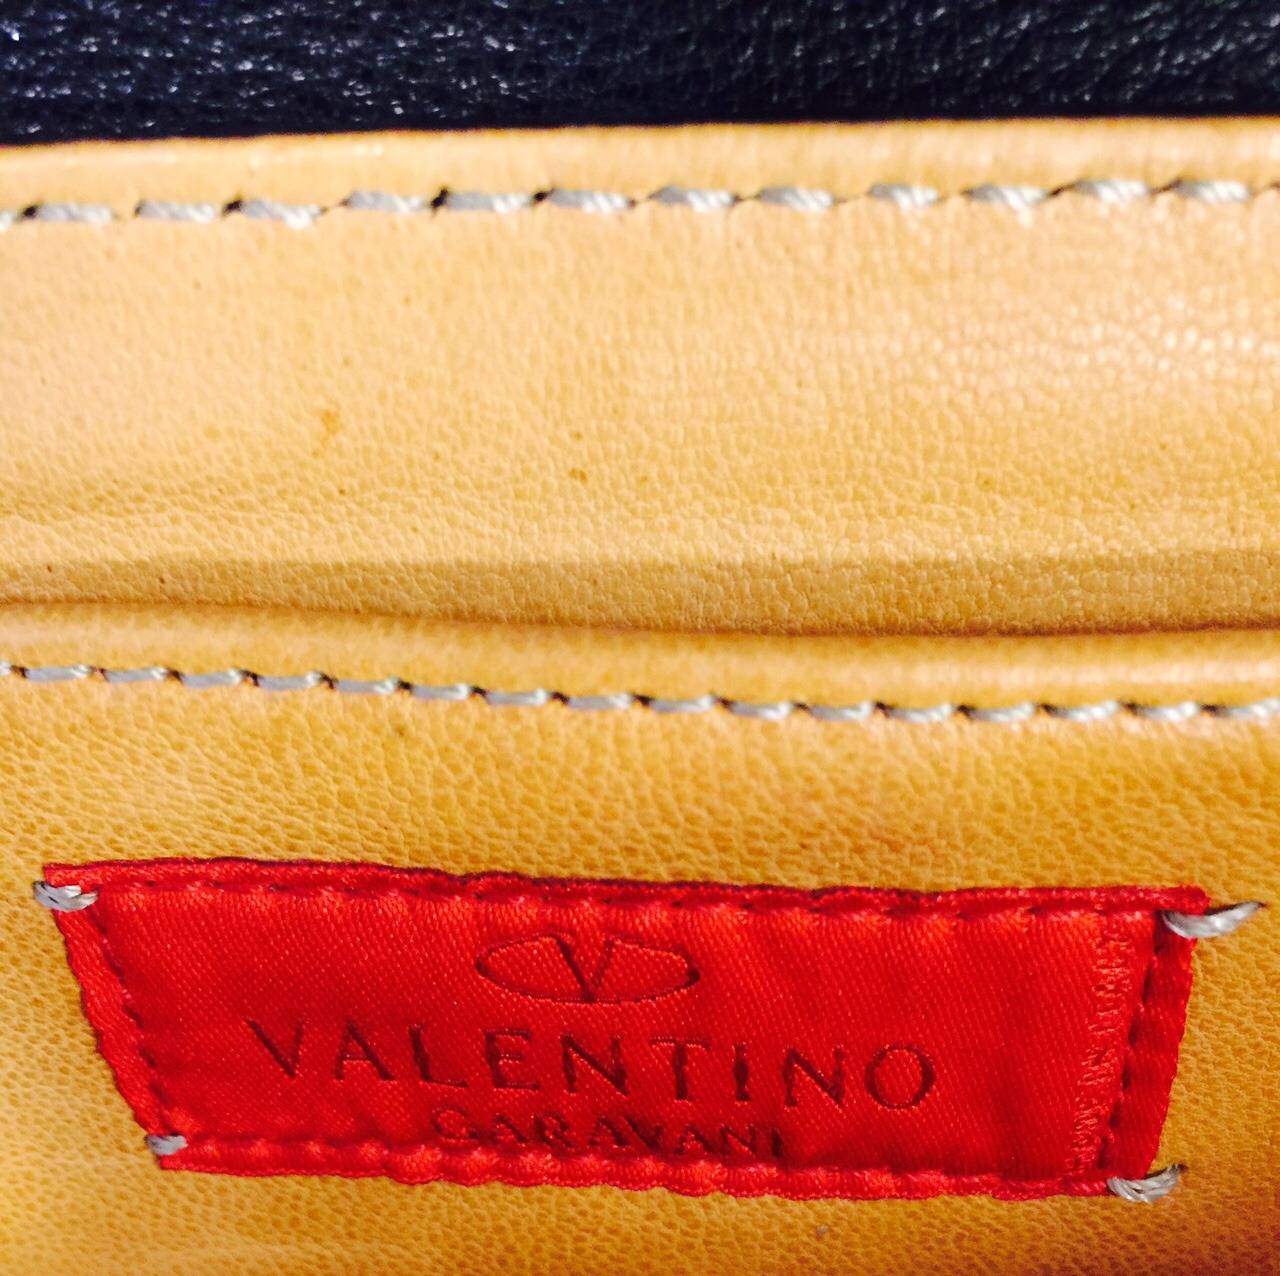 Valentino Garavani Patent Leather Shoulder Bag With Woven Chain Strap For Sale 3